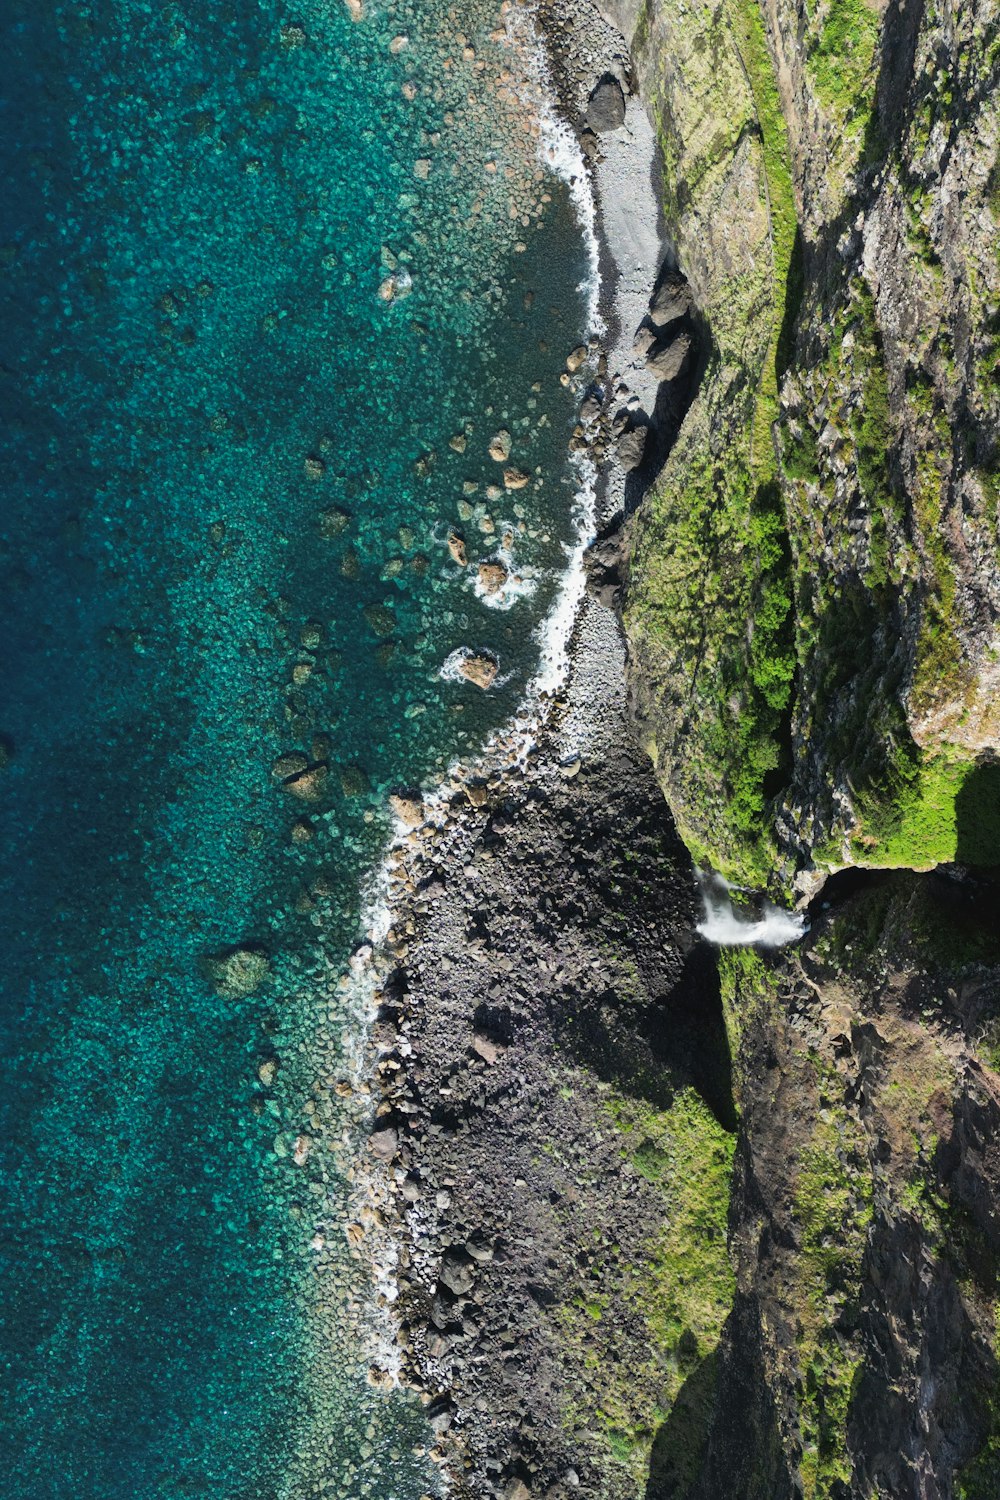 a bird's eye view of the ocean and cliffs